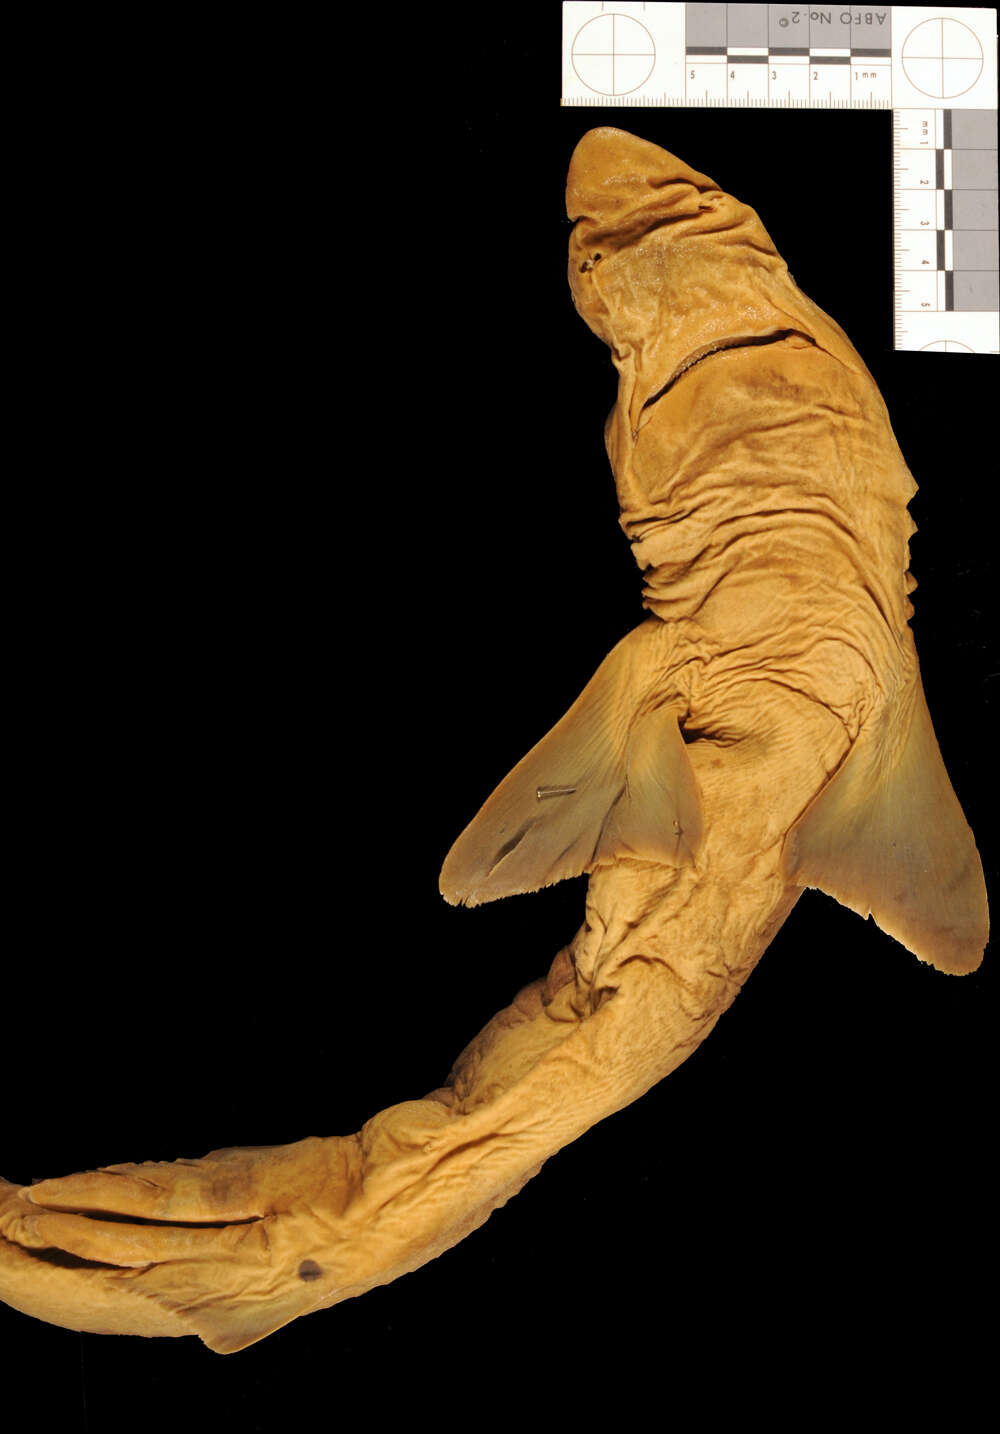 Image of Cape Shark